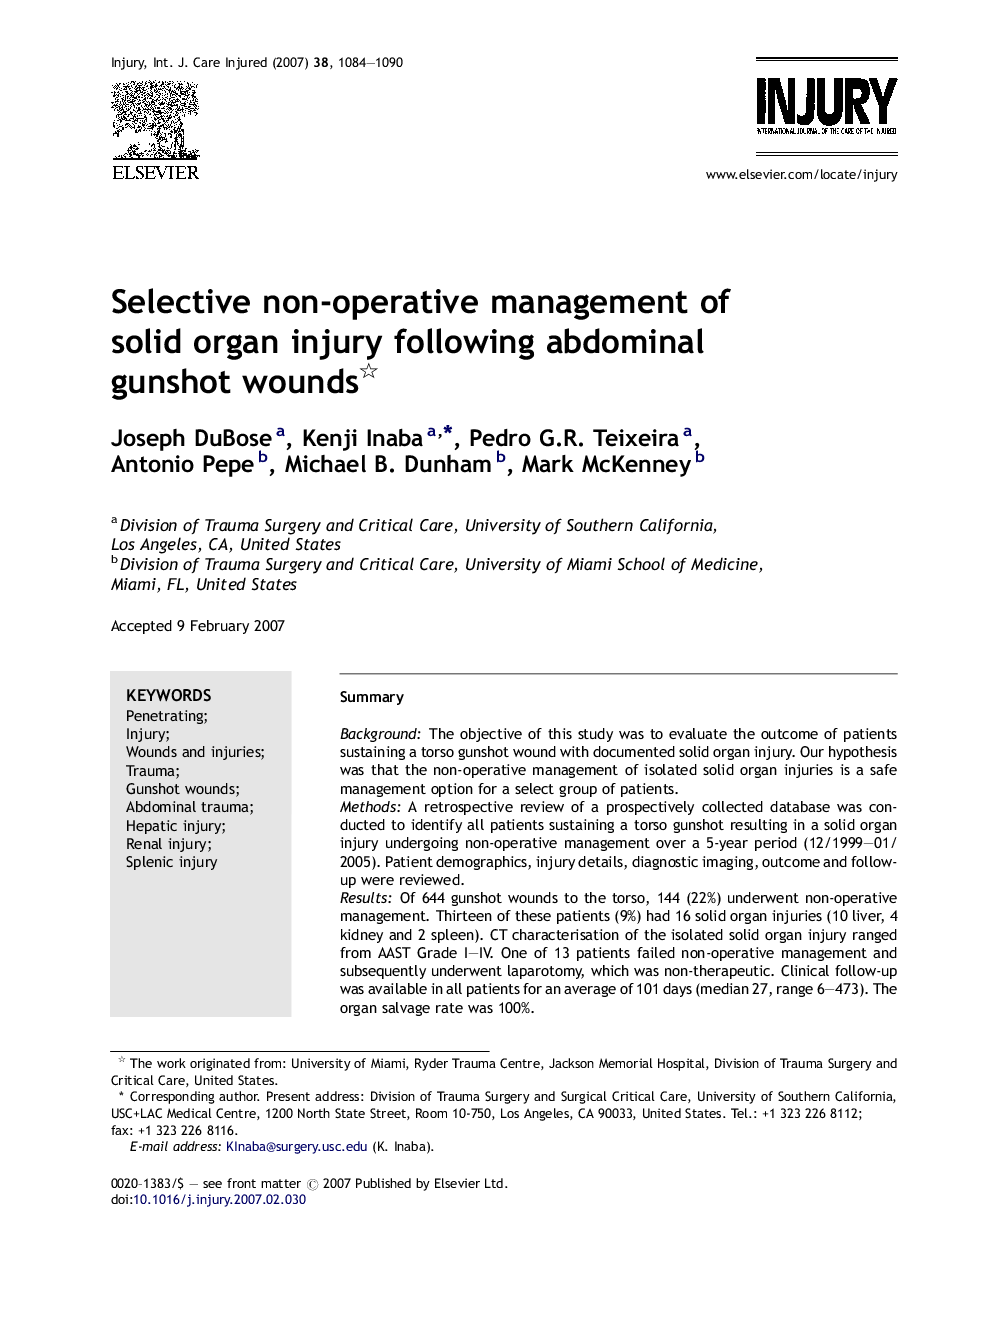 Selective non-operative management of solid organ injury following abdominal gunshot wounds 